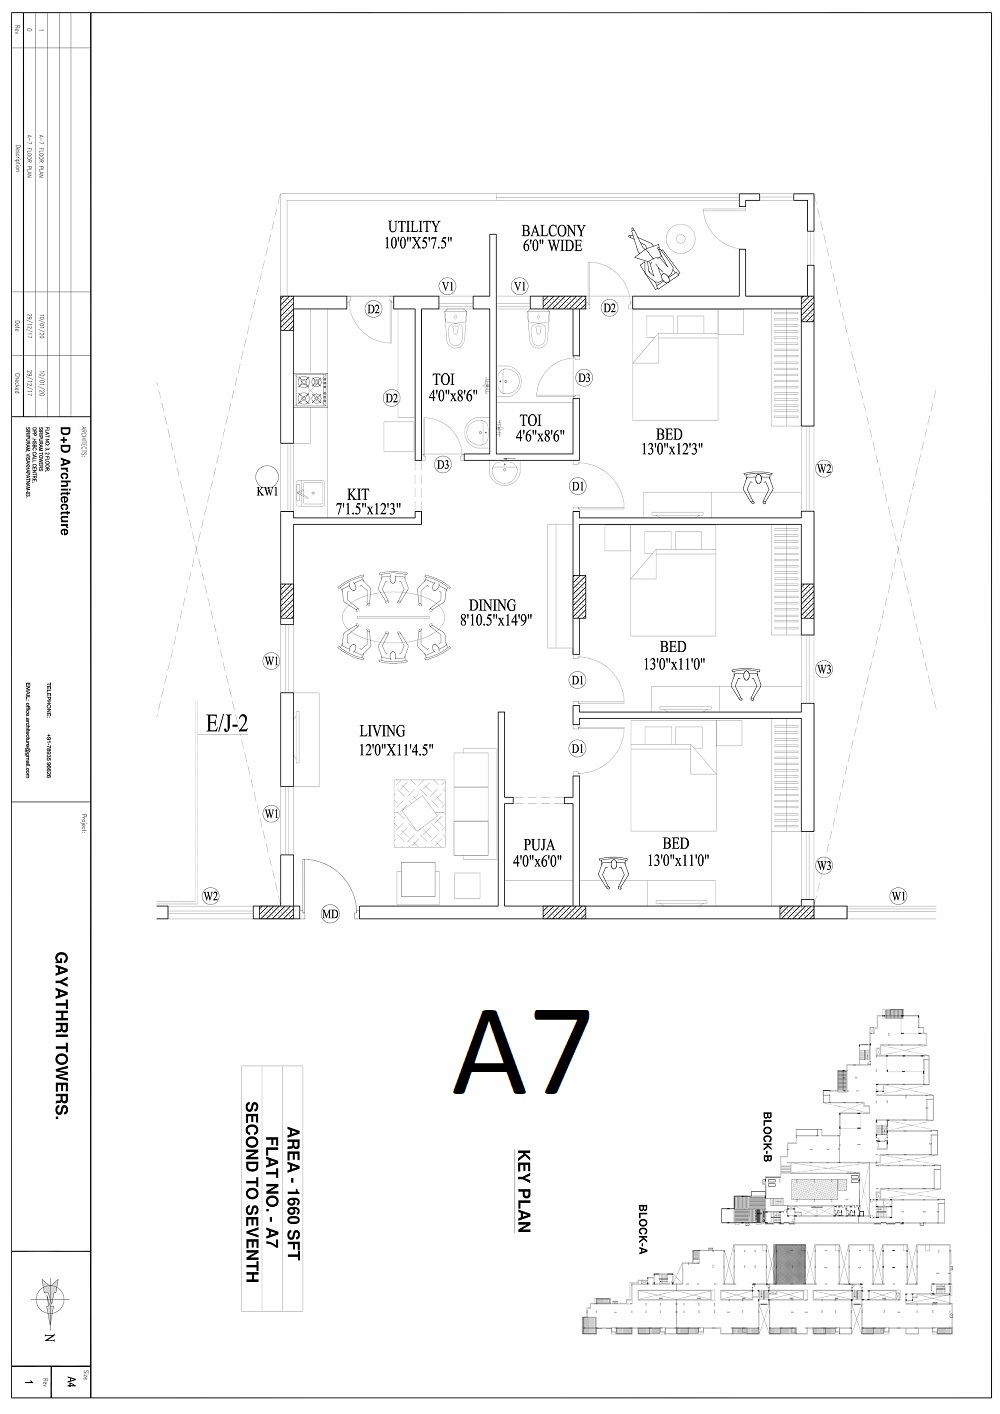 A7 - Tipcal Floor Plan